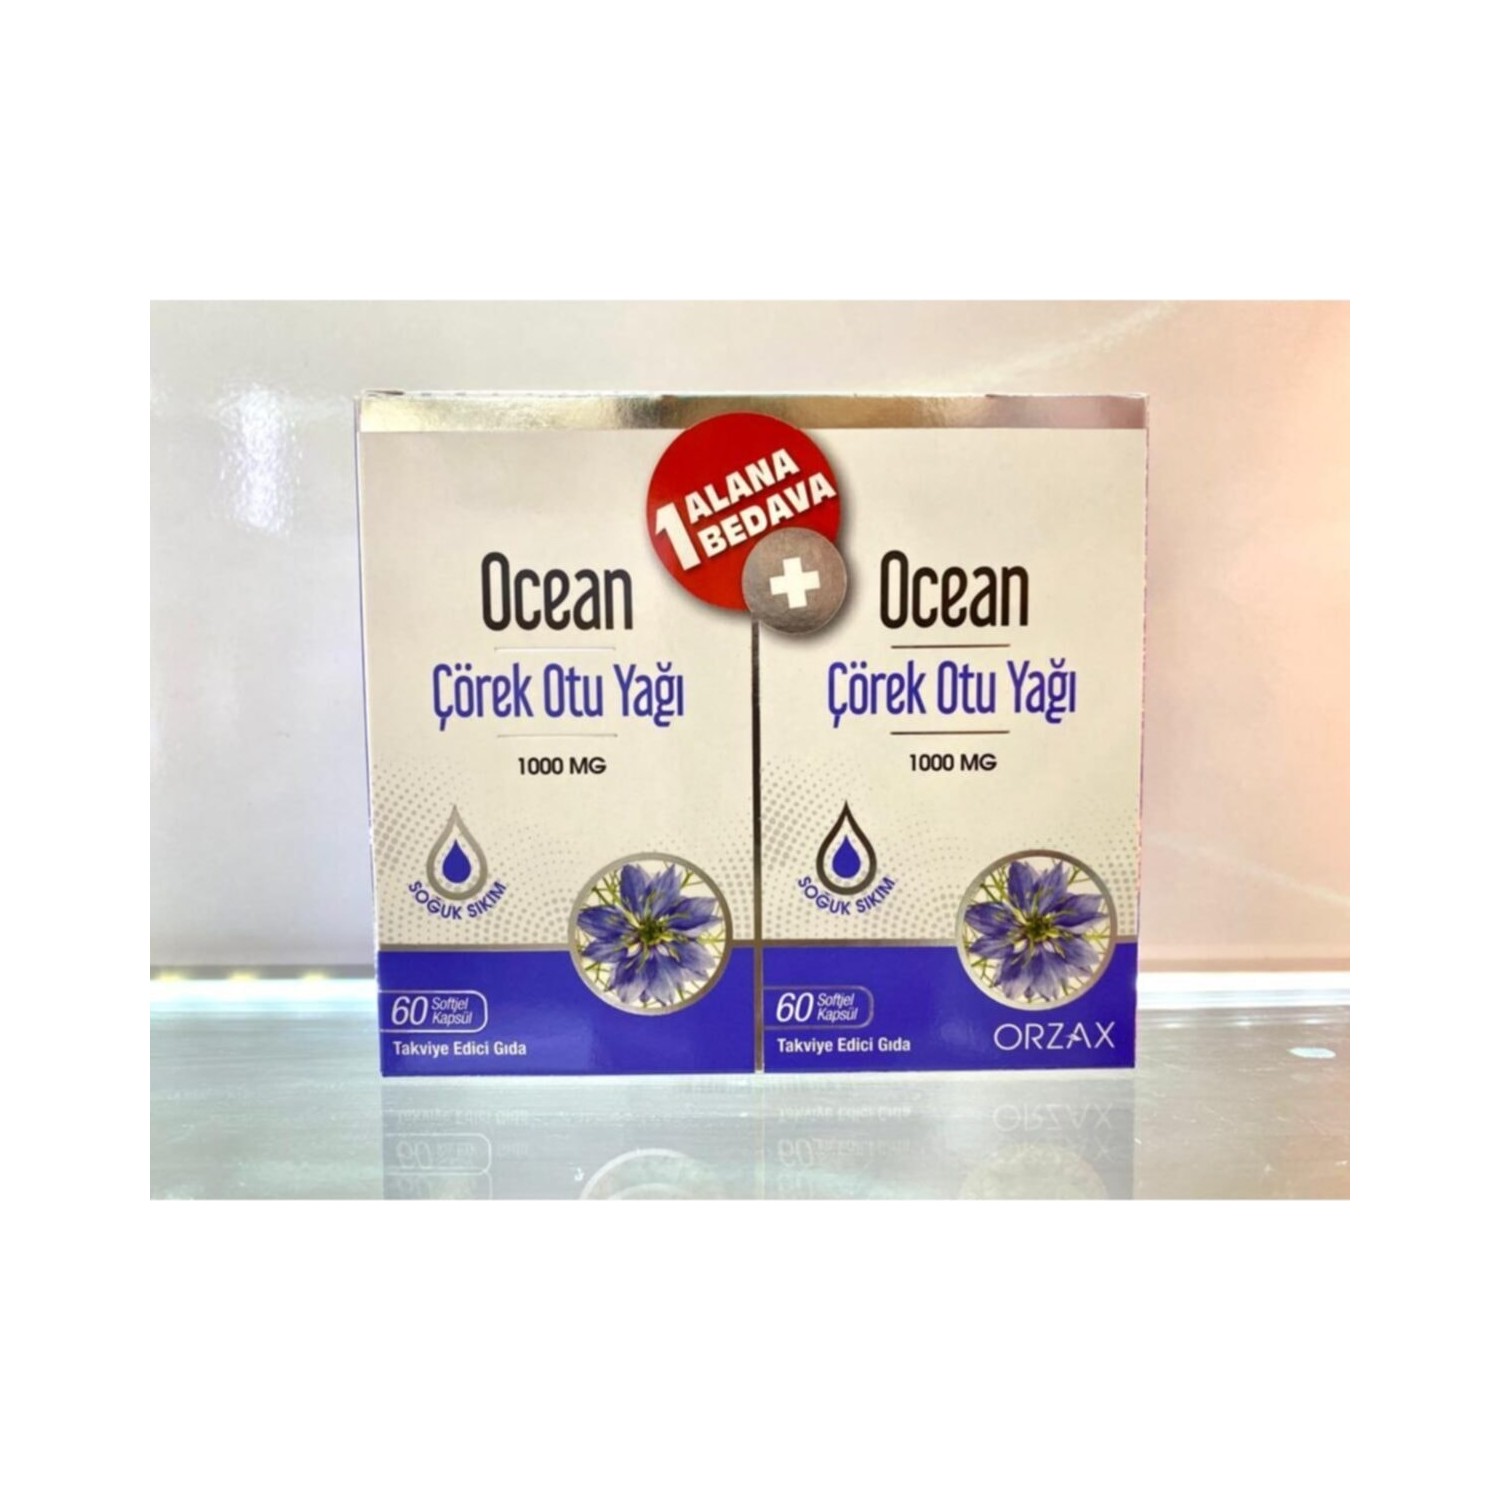 Масло черного тмина Orzax Ocean 1000 мг, 2 упаковки по 60 капсул масло черного тмина orzax ocean 1000 мг 2 упаковки